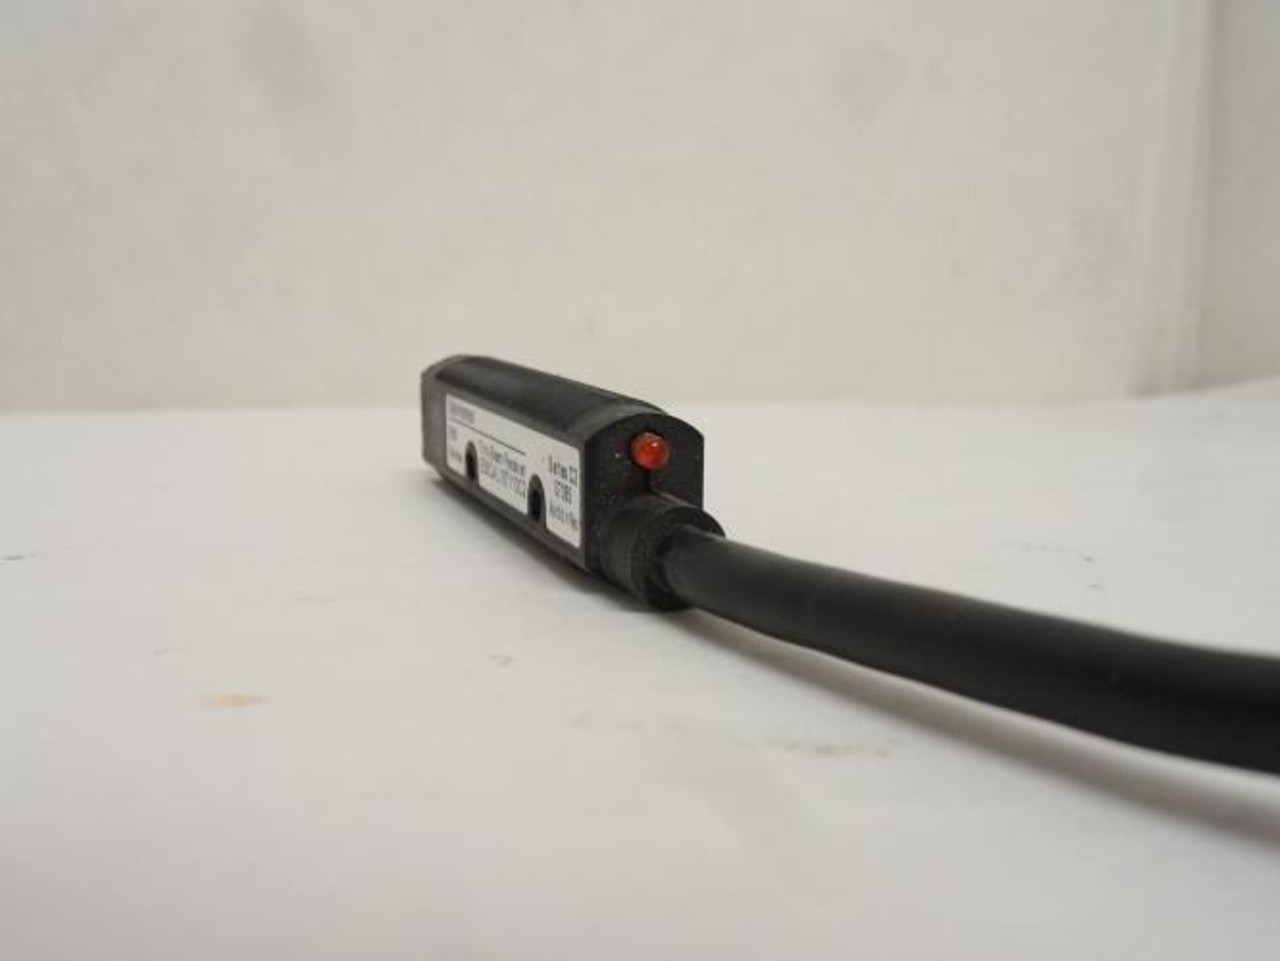 Cutler-Hammer E58CAL18T110C2; Photo Sensor; 10-30VDC; 3m Wire